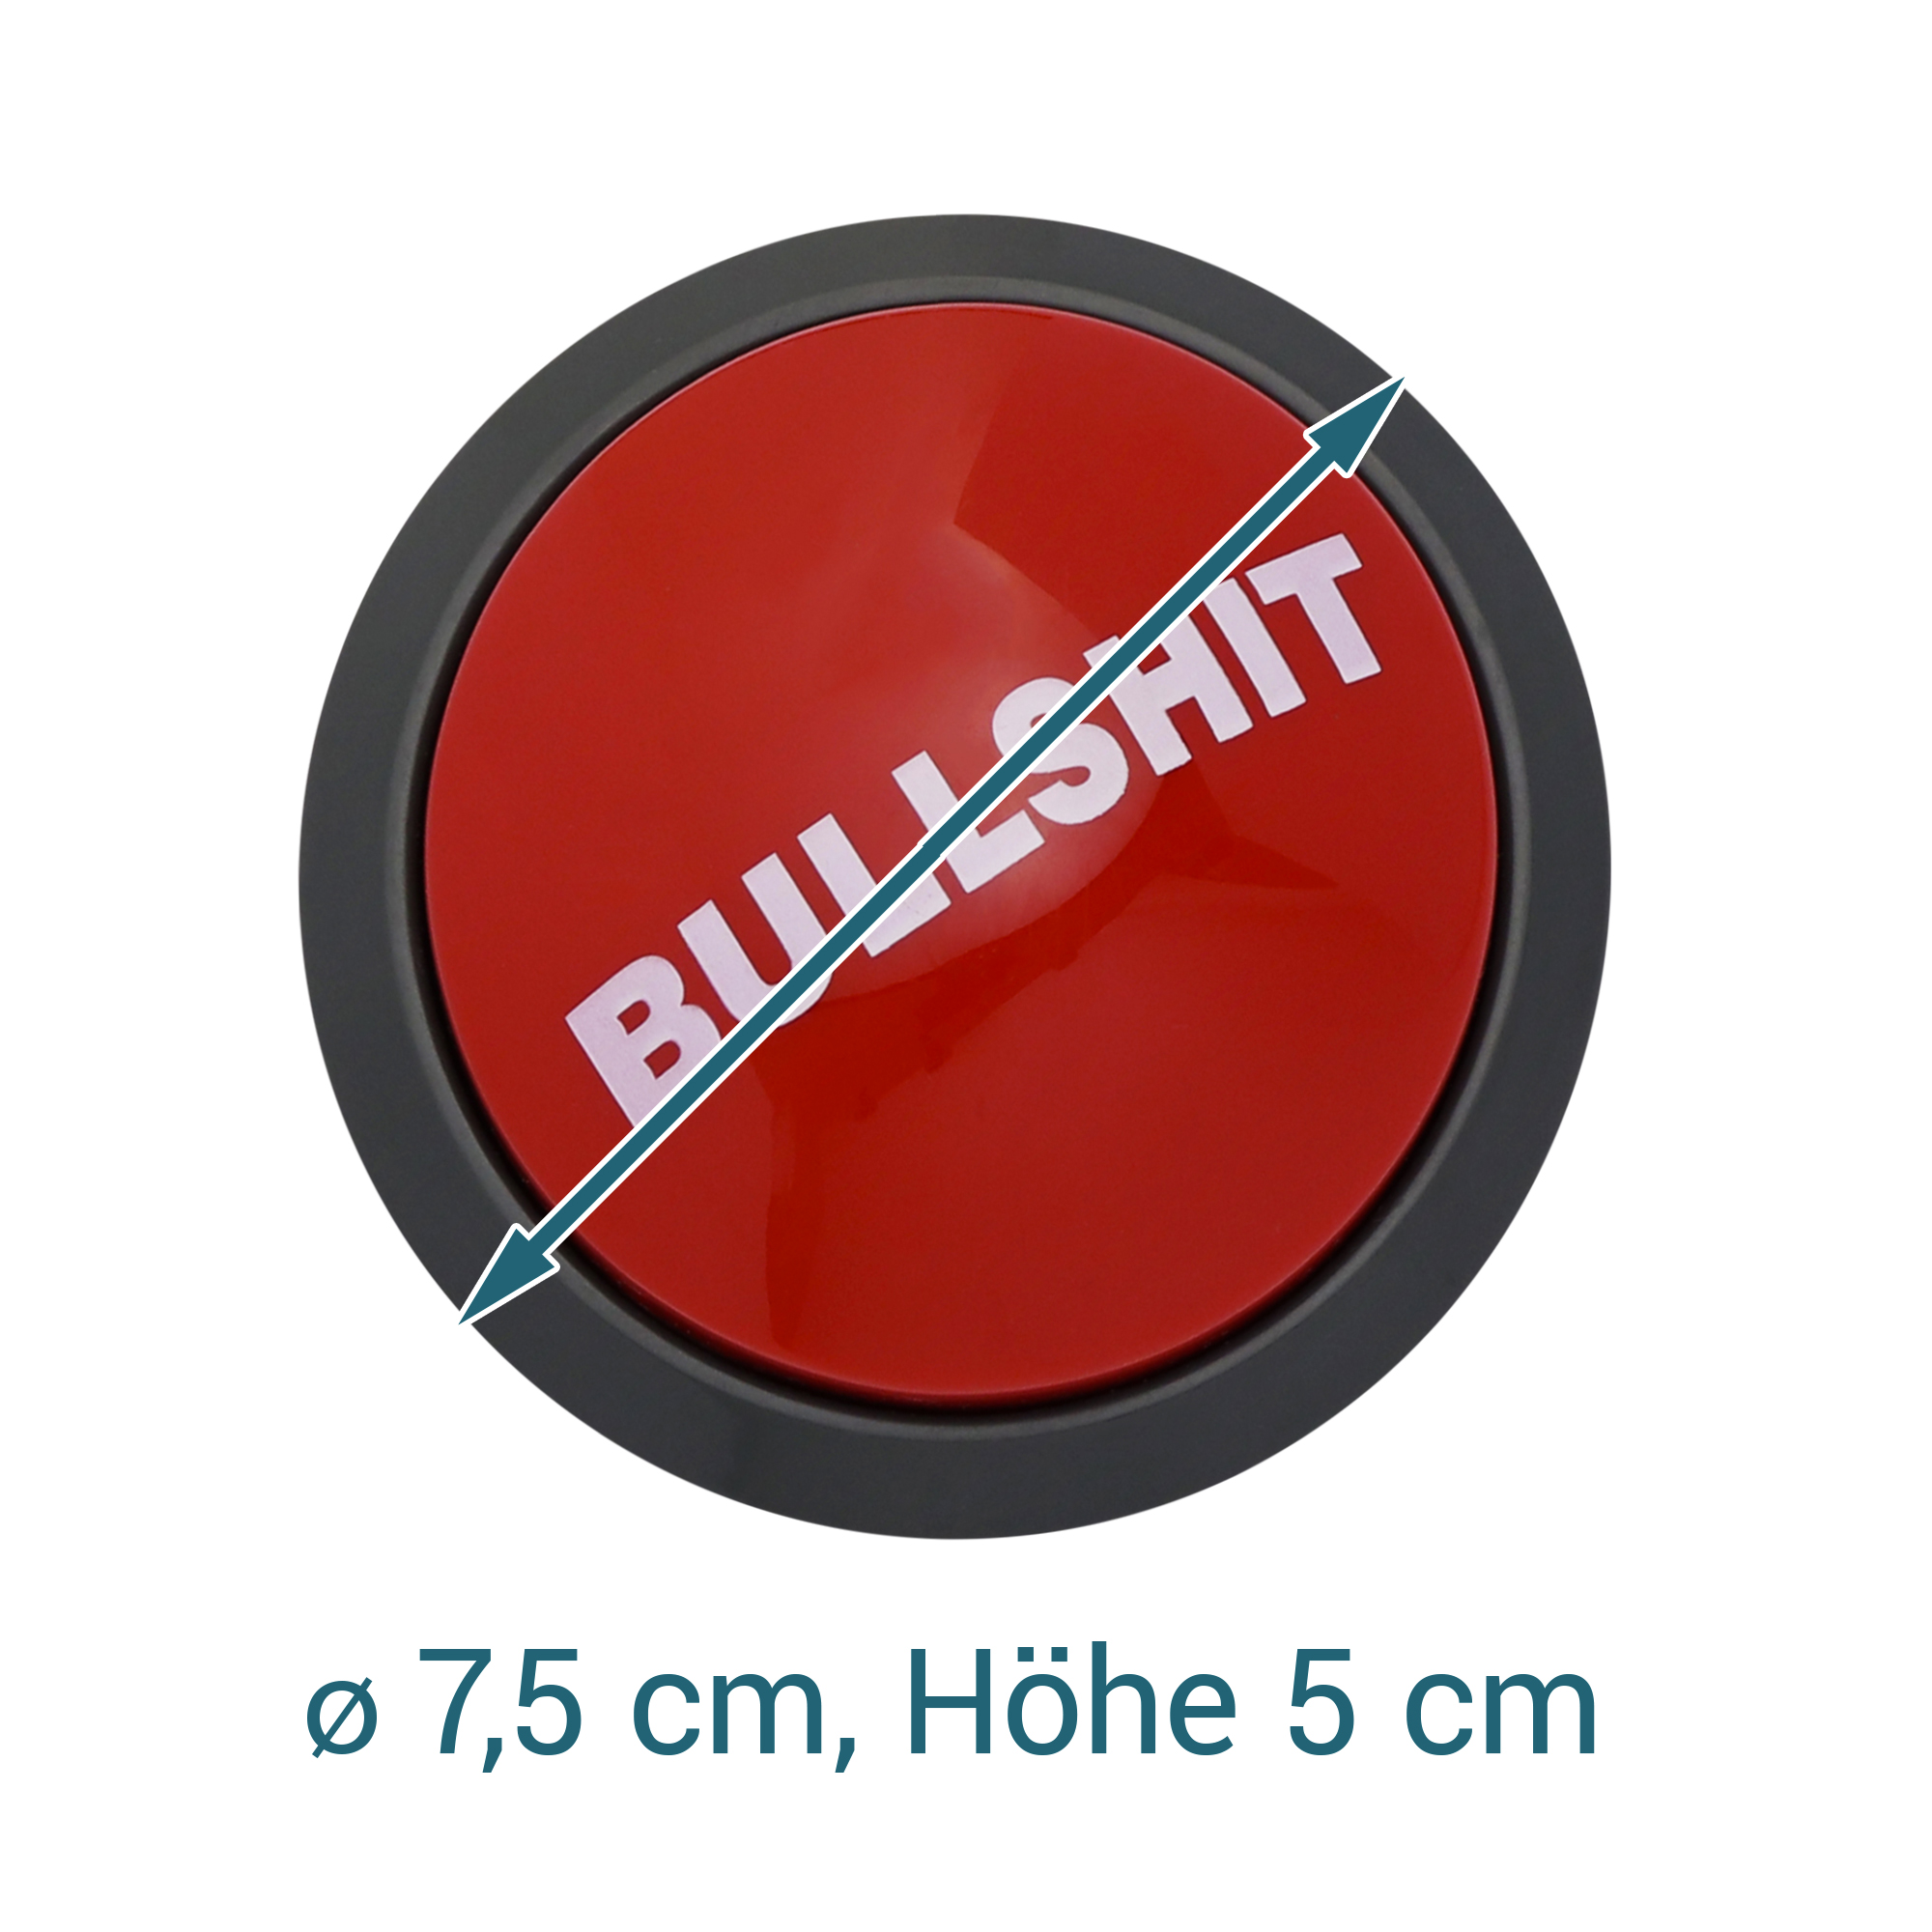 Bullshit Button - Sound Buzzer